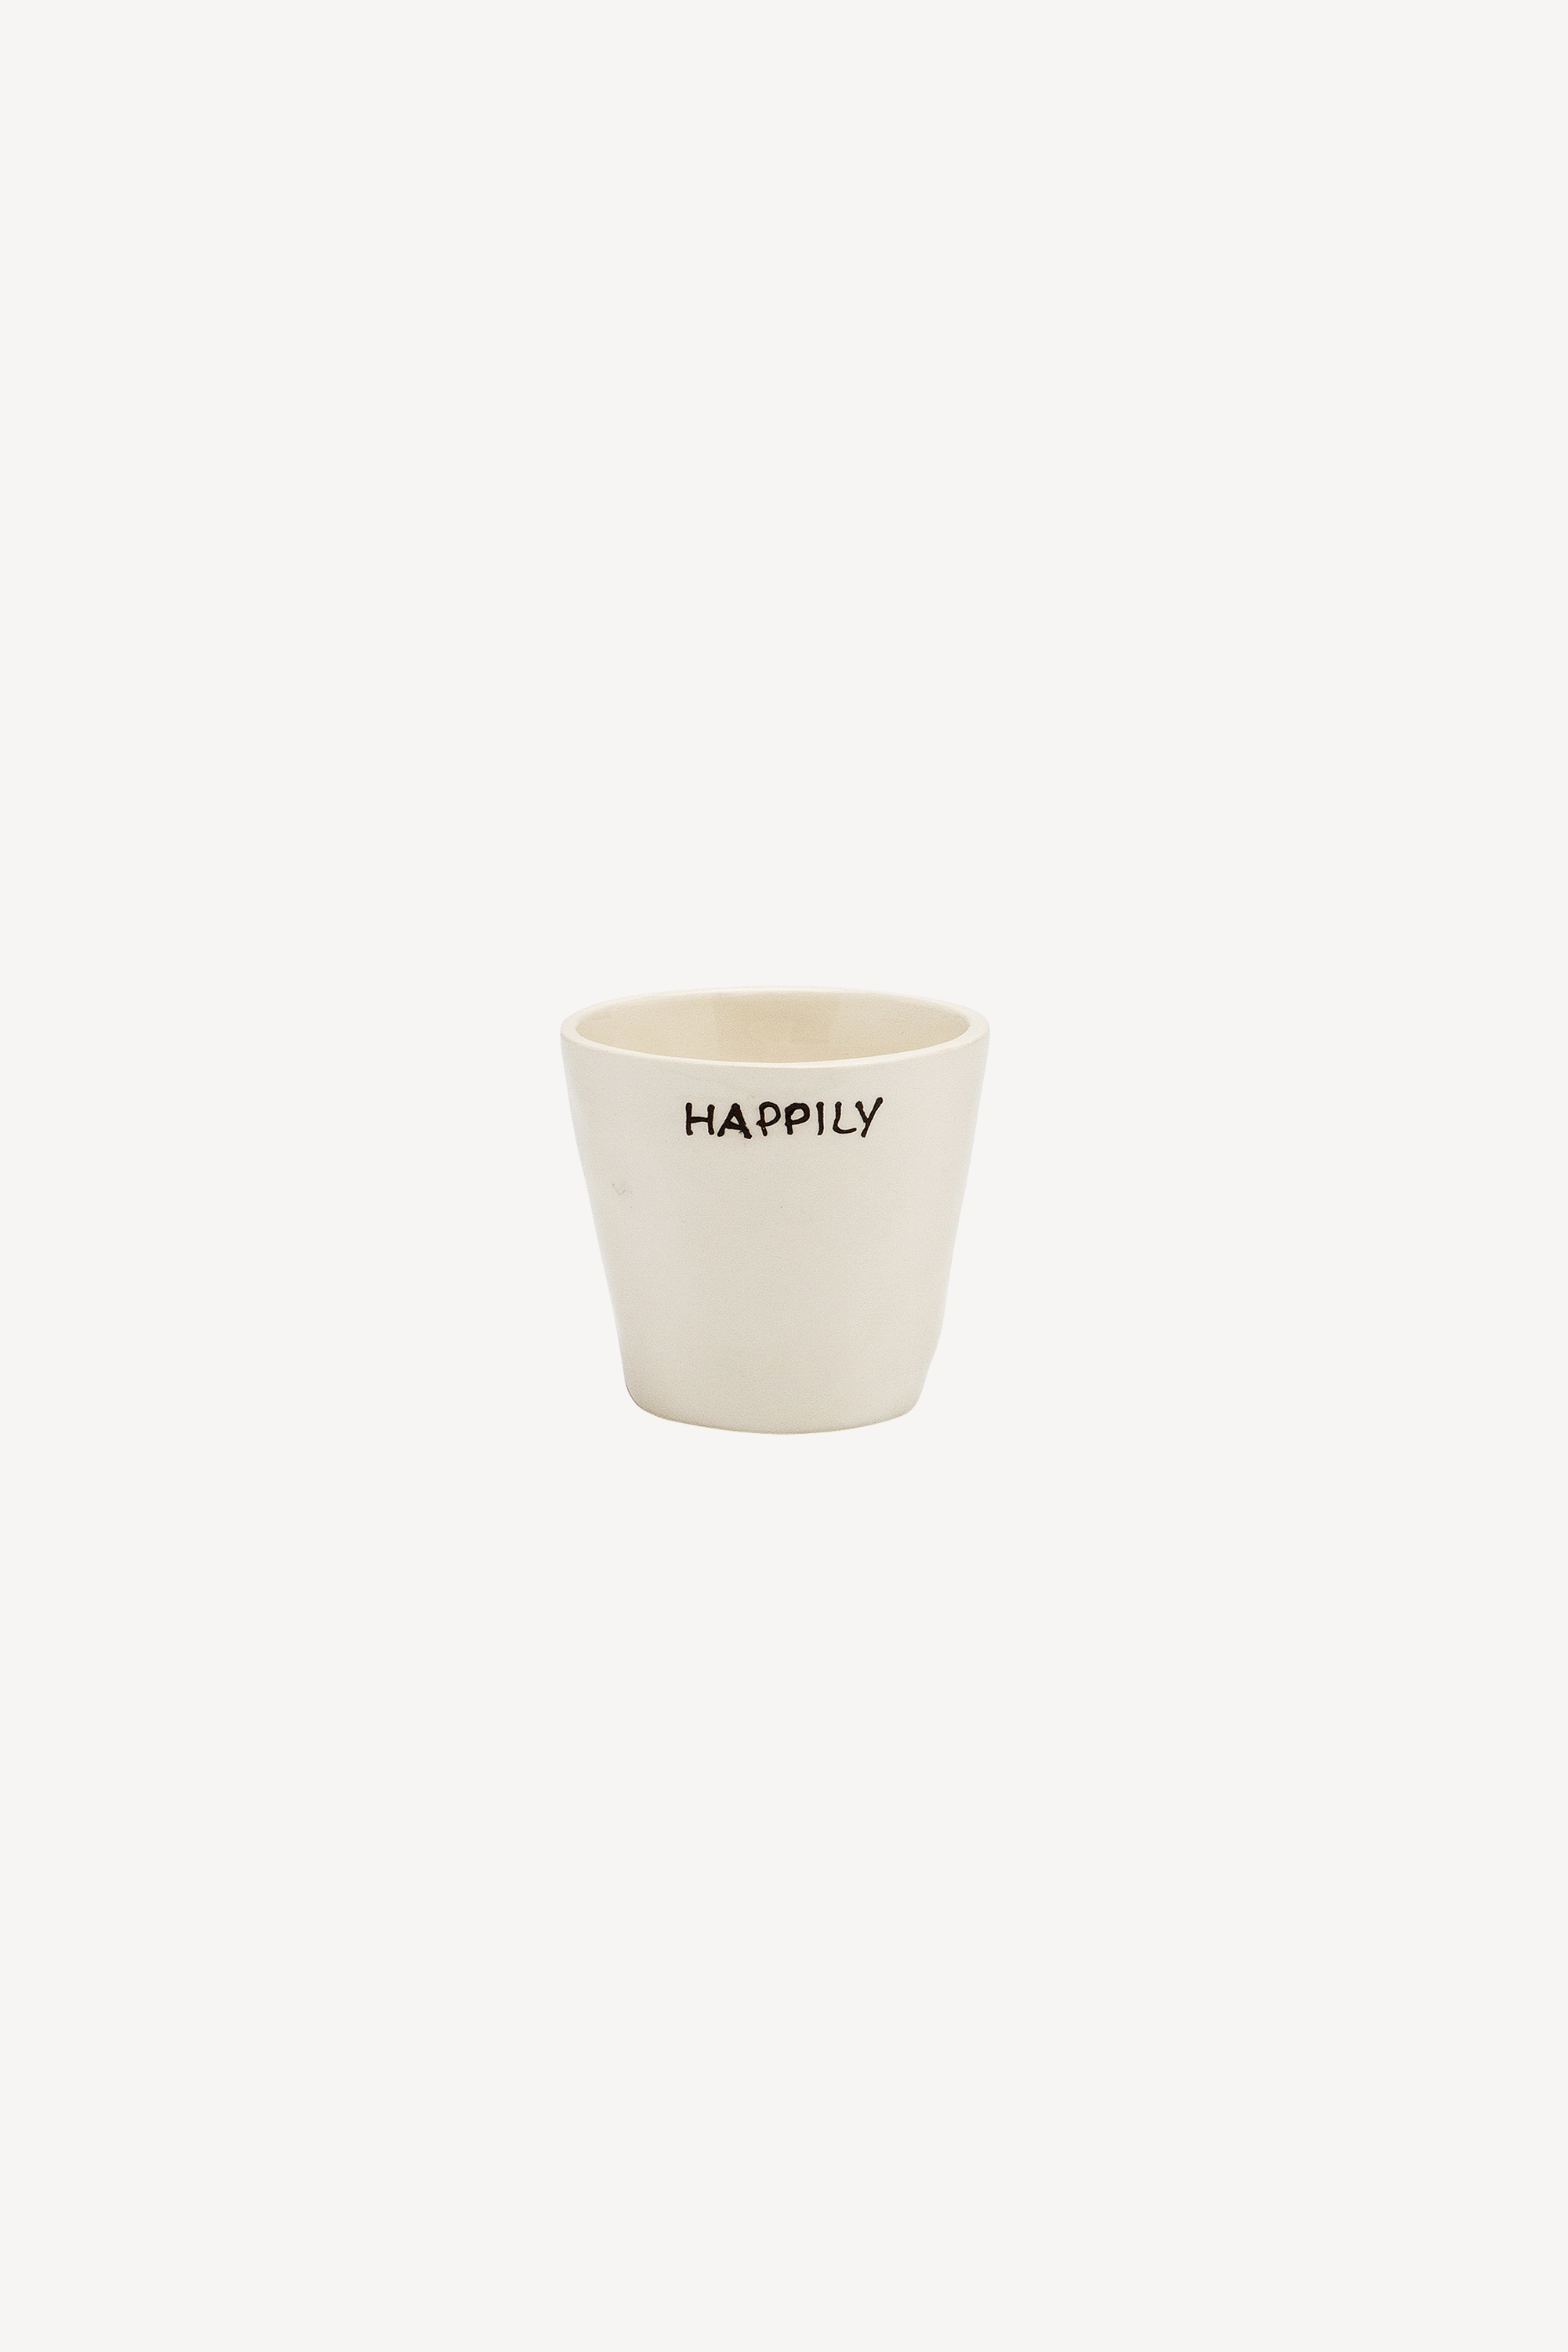 Happily Espresso Cup